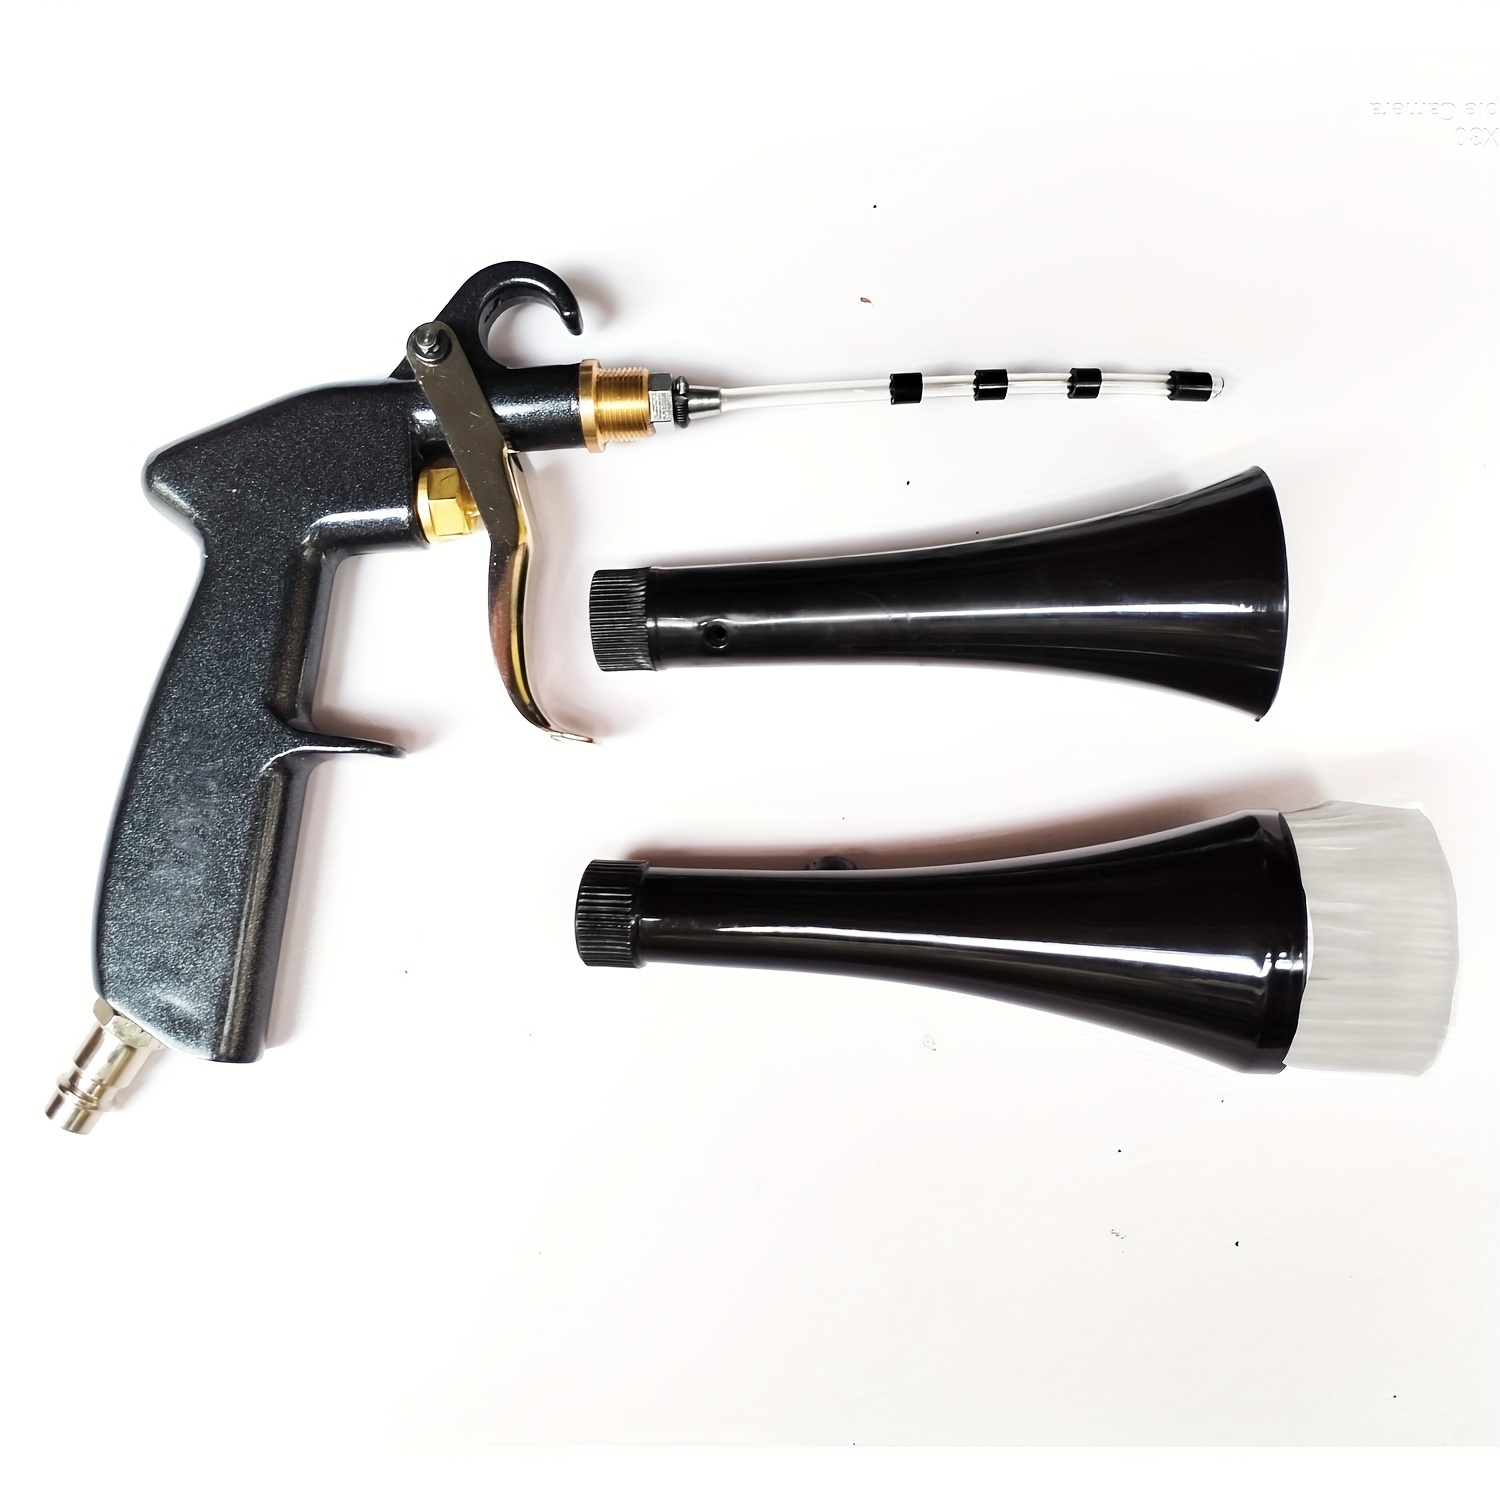 Tornador Blow Gun Tool | Air Powered Interior Cleaning Tool